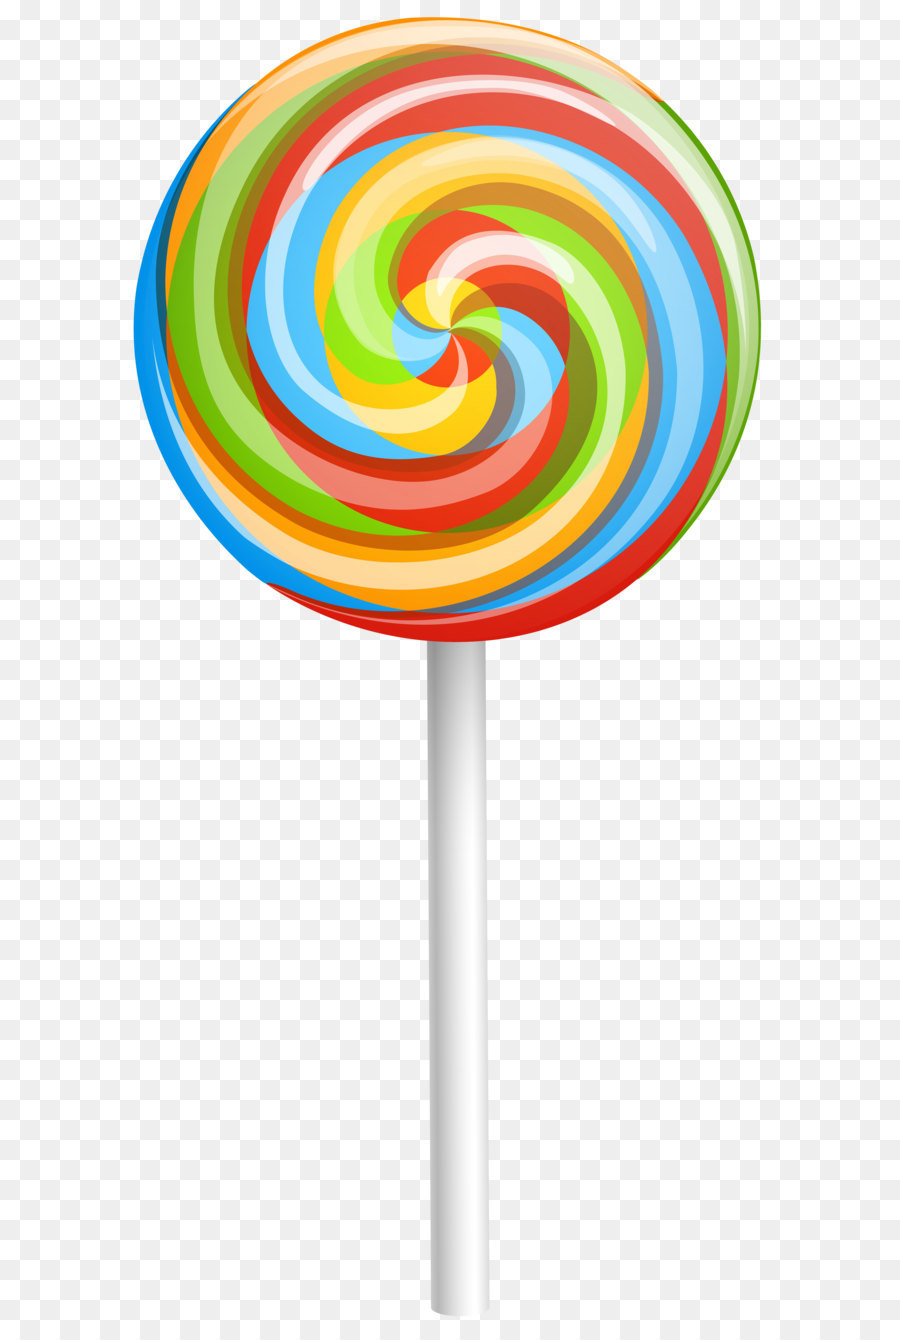 Candy clipart lollipop. Clip art rainbow swirl